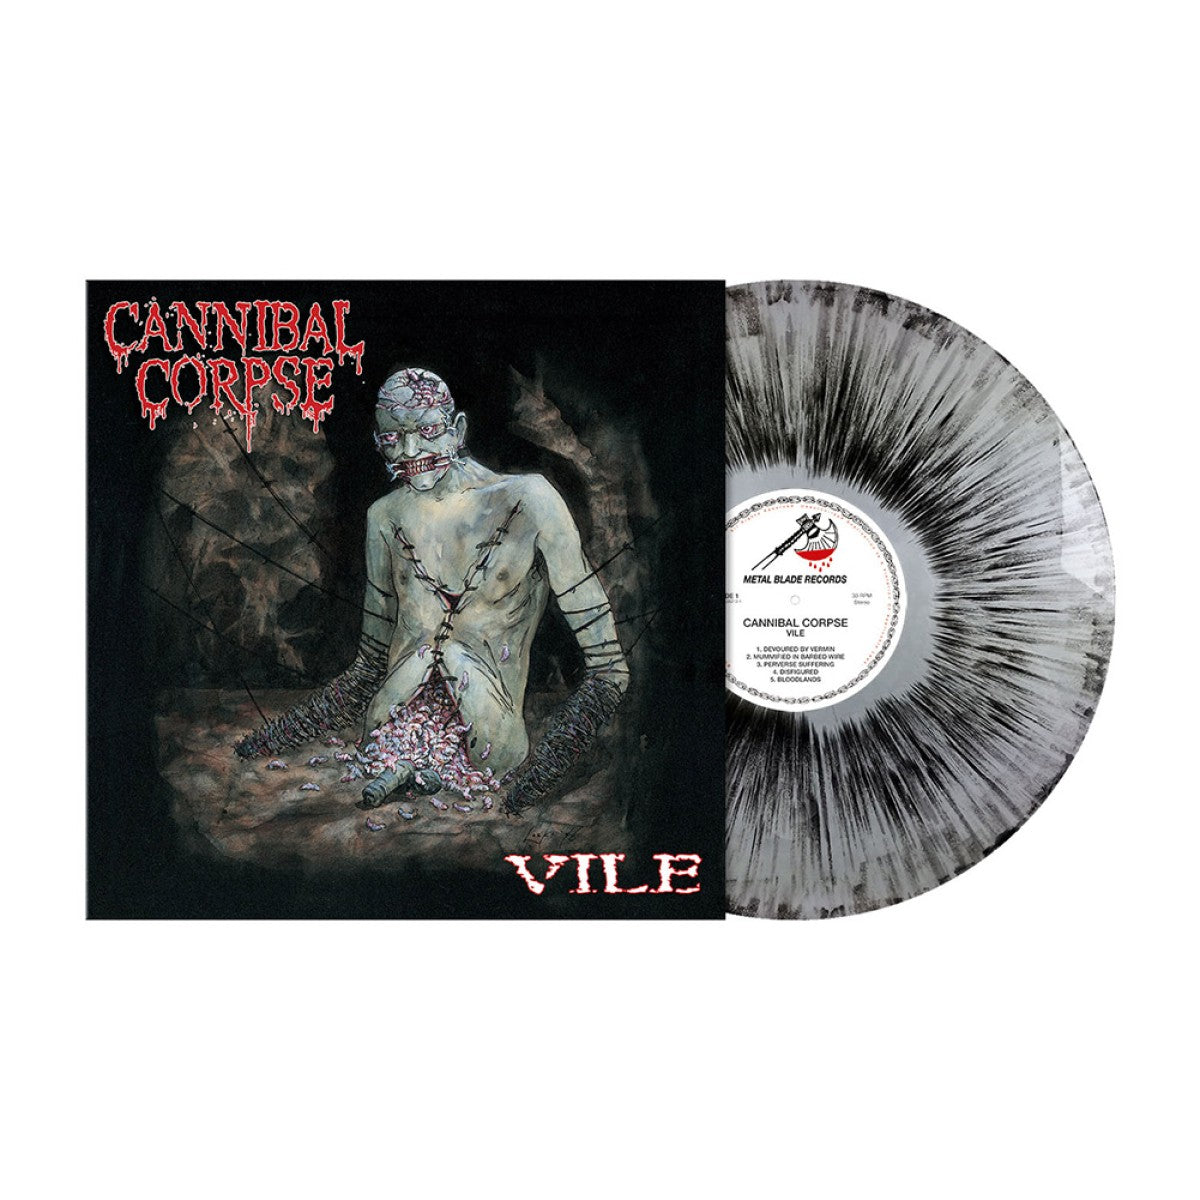 Cannibal Corpse "Vile" Silver / Black Dust Vinyl